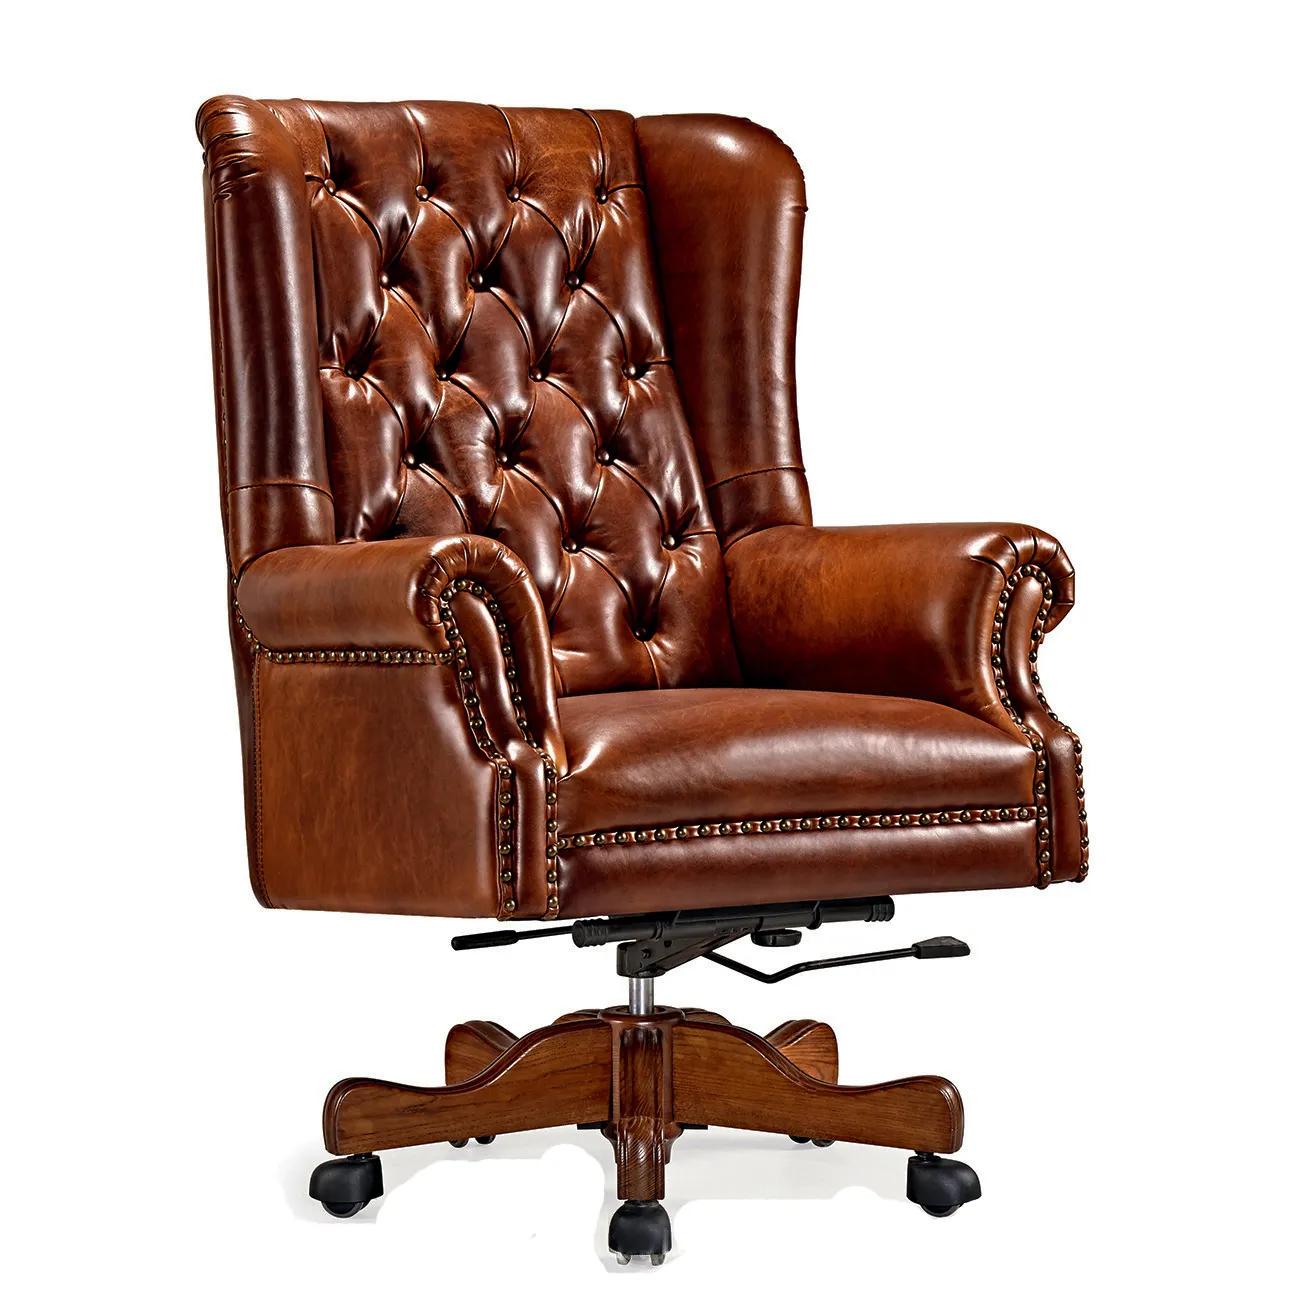 Europäischer Stil Computer Haushalt Büro Luxus High-End Leder Boss Stuhl hohe Rückenlehne drehbar amerikanischen Stil großen Klasse Stuhl